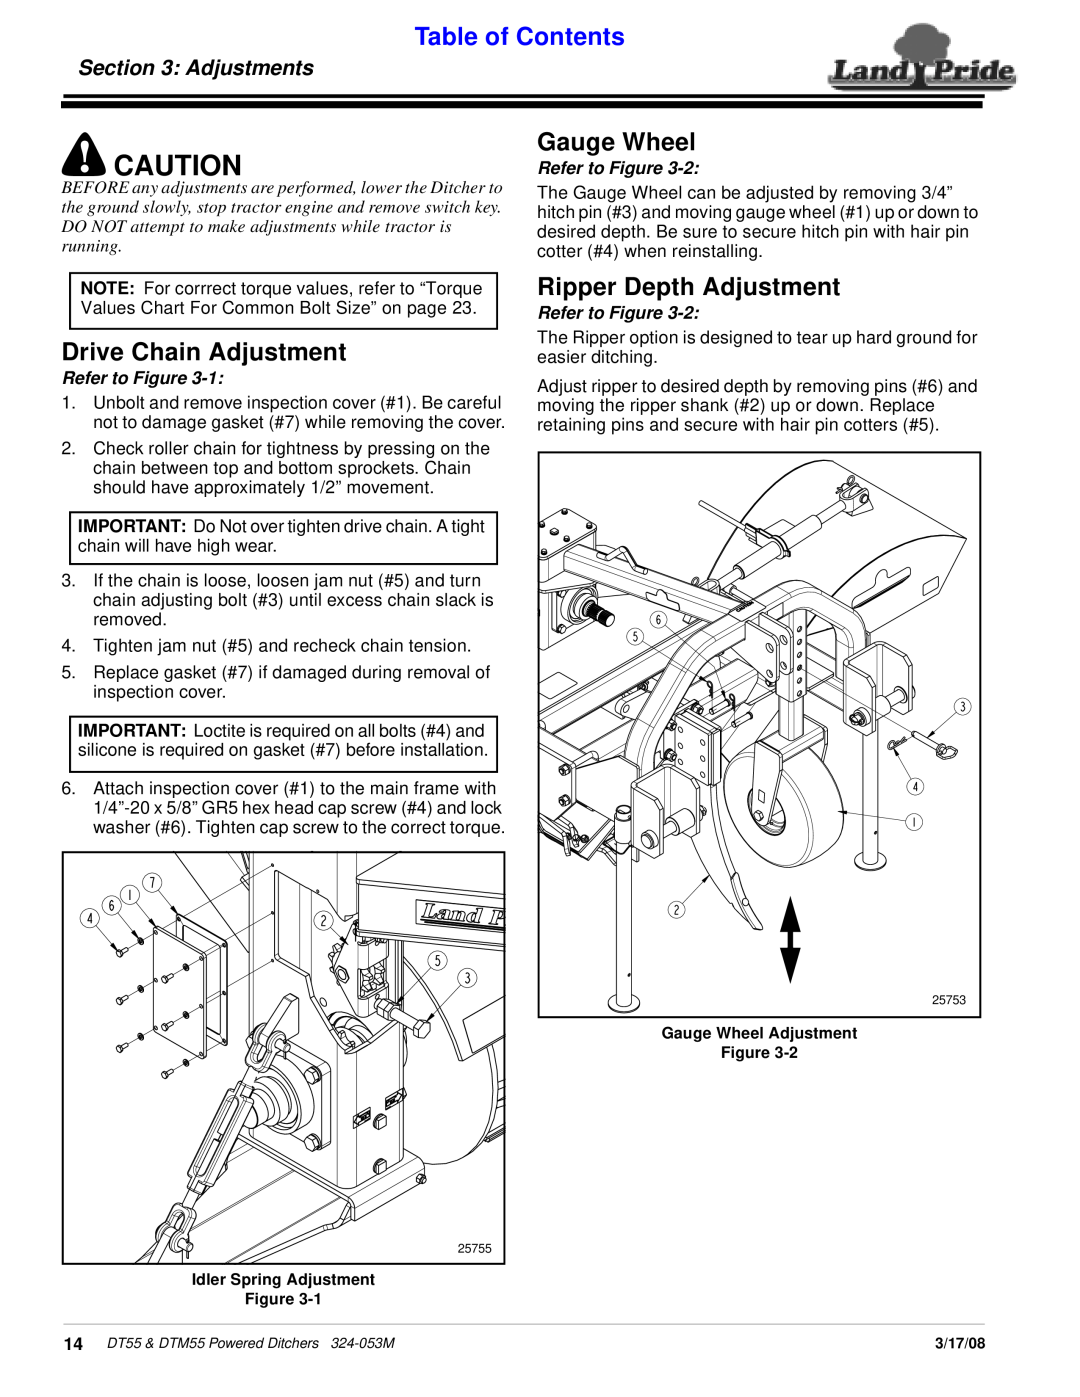 Land Pride DT55, DTM55 manual Drive Chain Adjustment, Gauge Wheel, Ripper Depth Adjustment, Adjustments, Table of Contents 